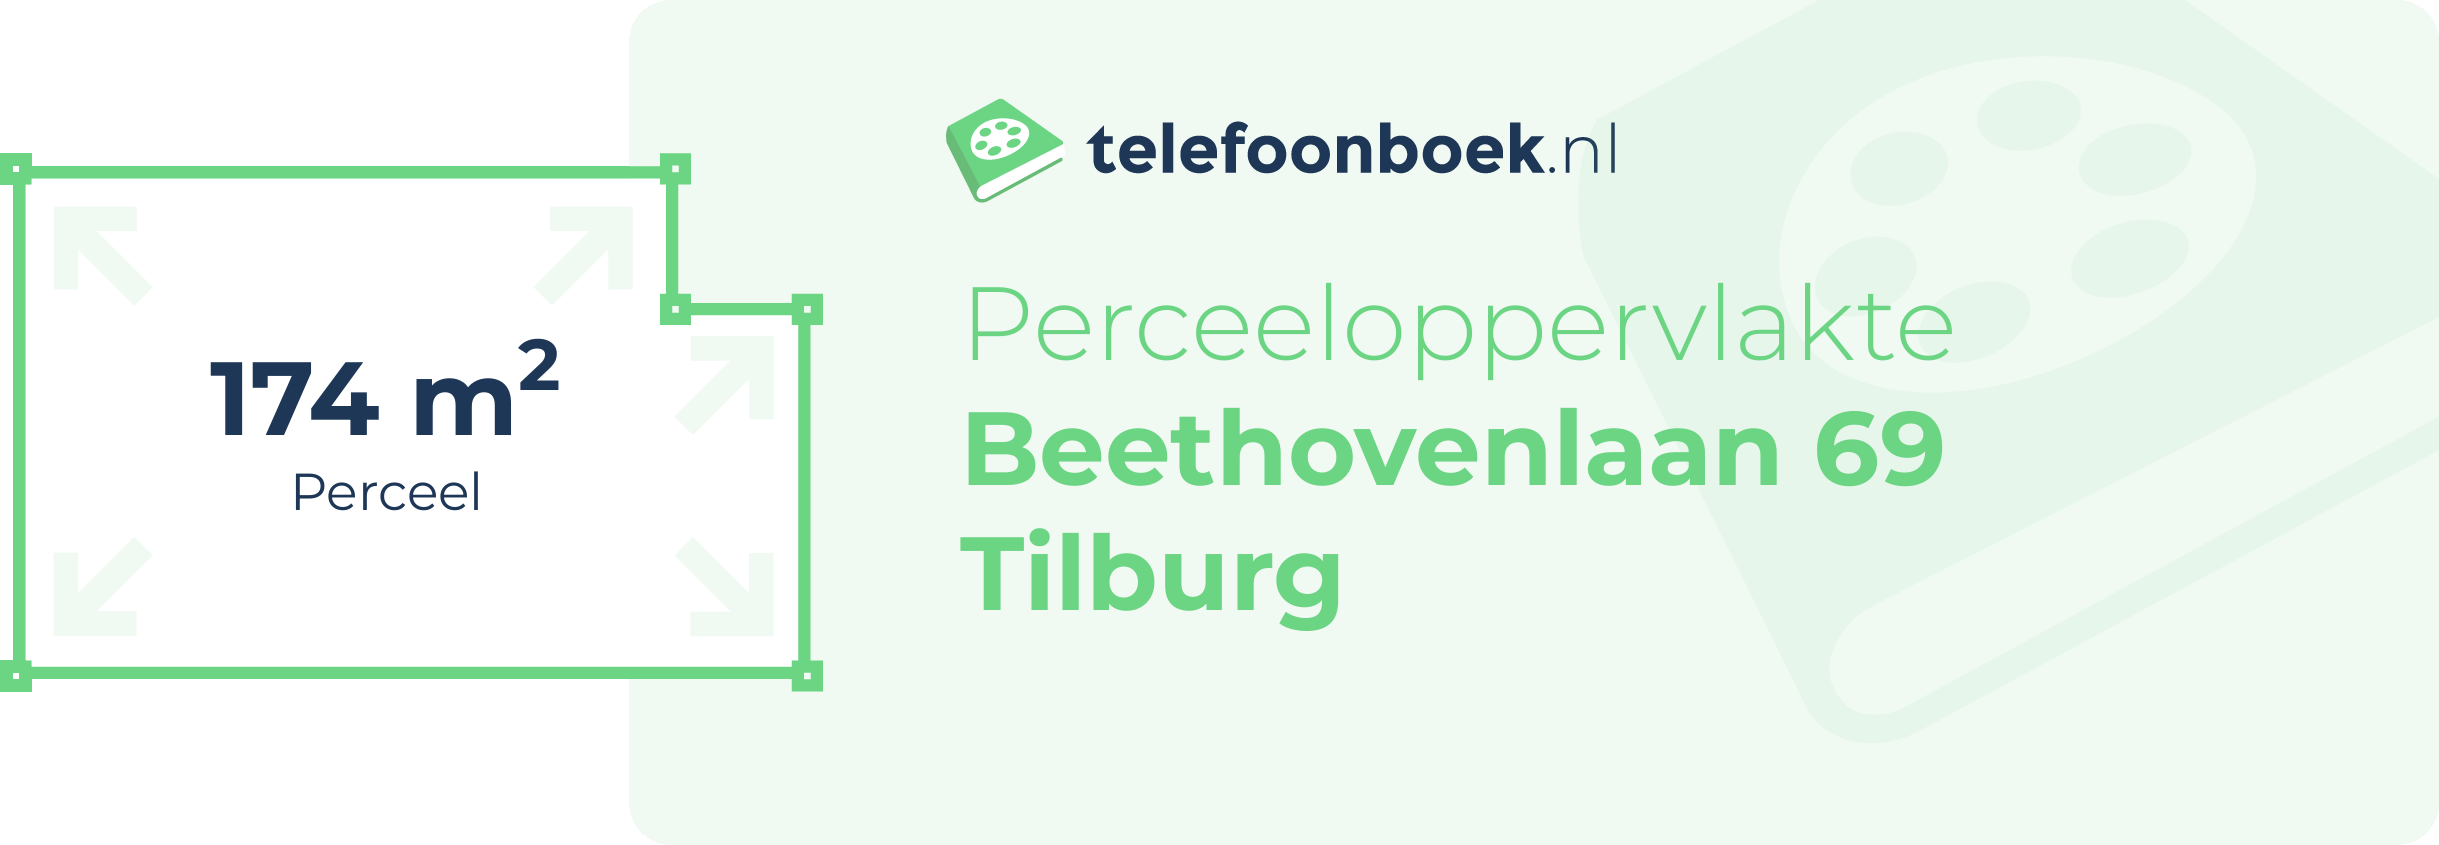 Perceeloppervlakte Beethovenlaan 69 Tilburg